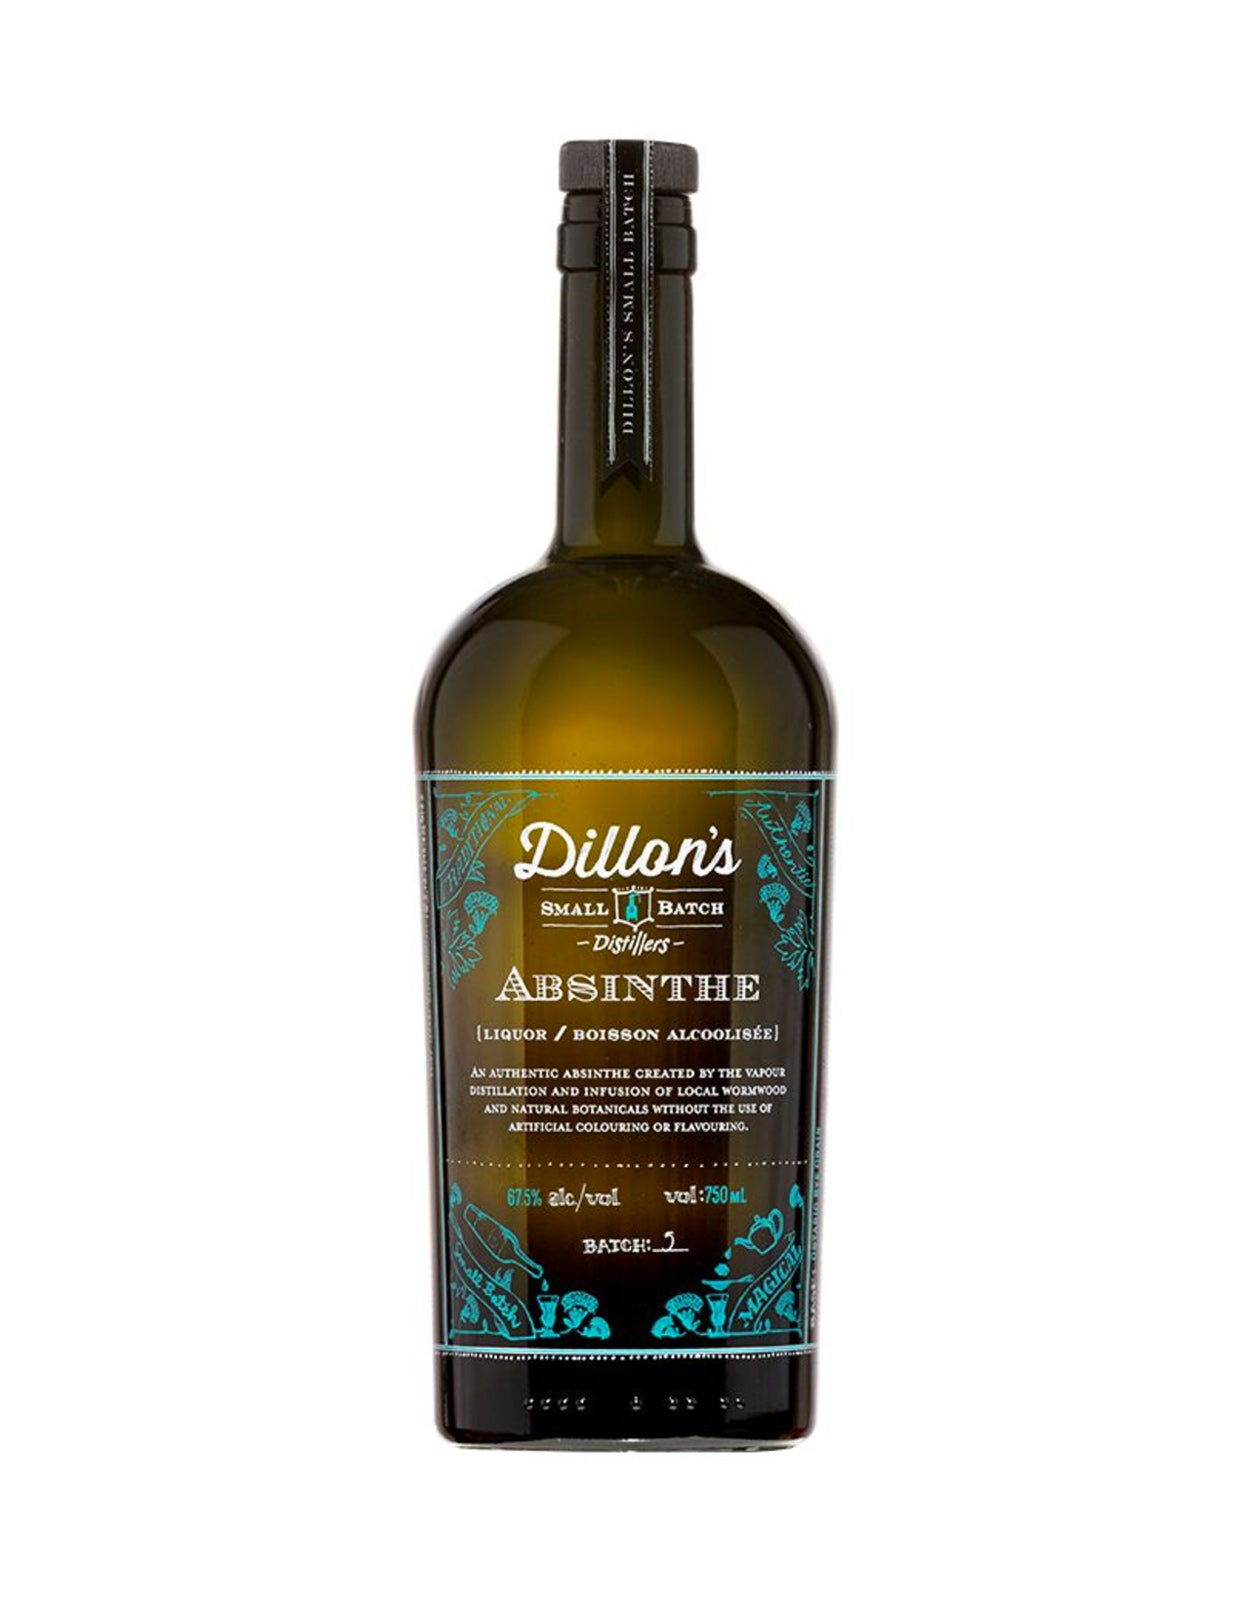 Dillon's Absinthe